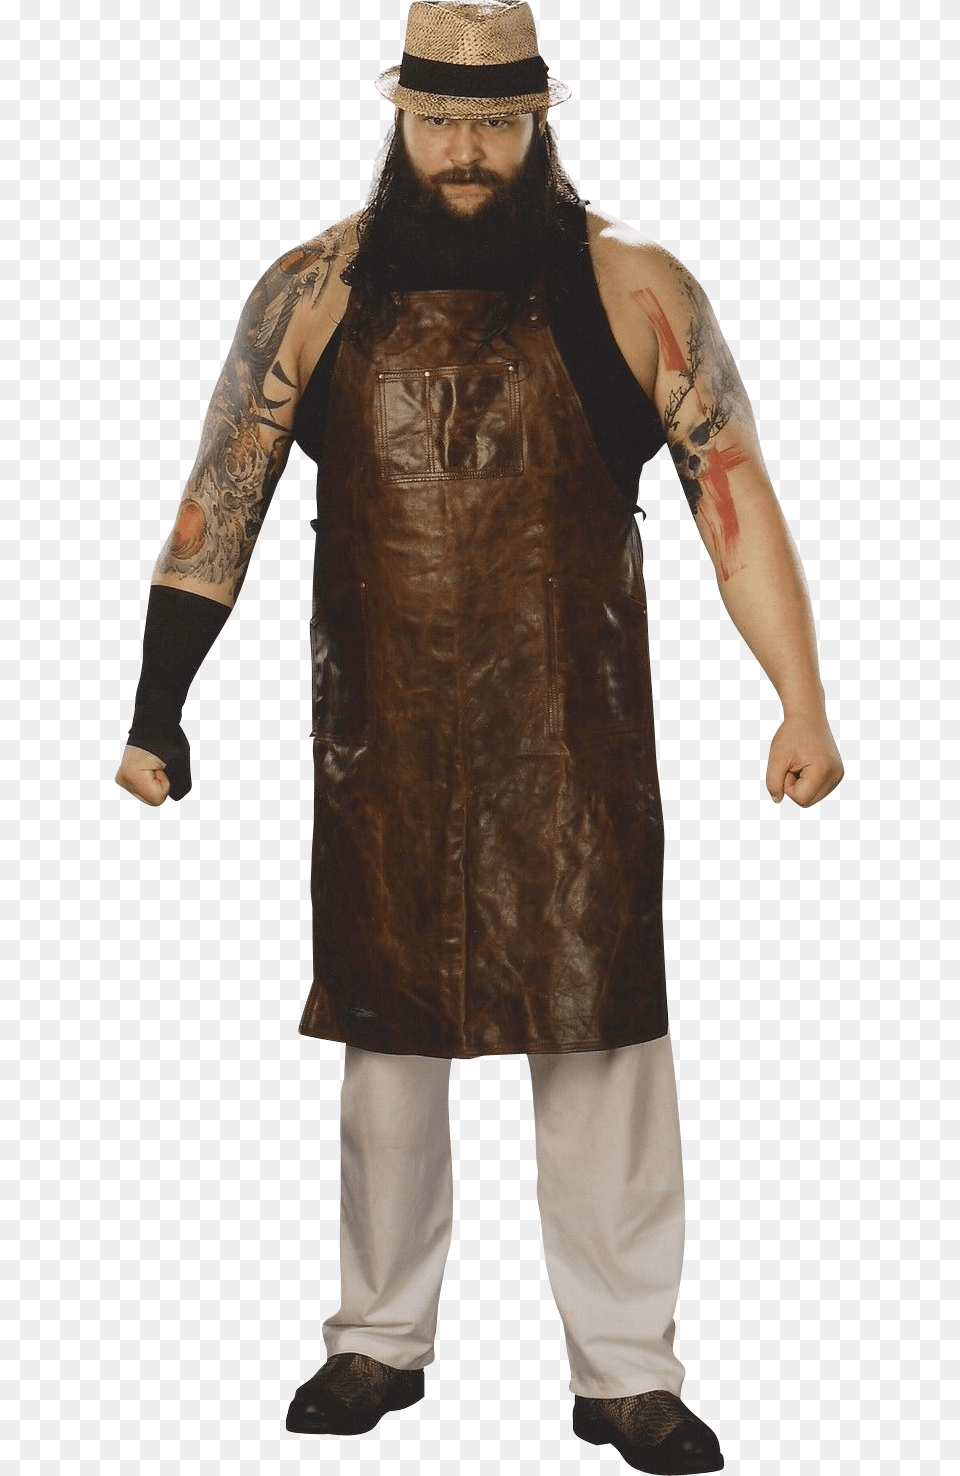 Bray Wyatt Cardboard Cutout, Vest, Clothing, Coat, Tattoo Png